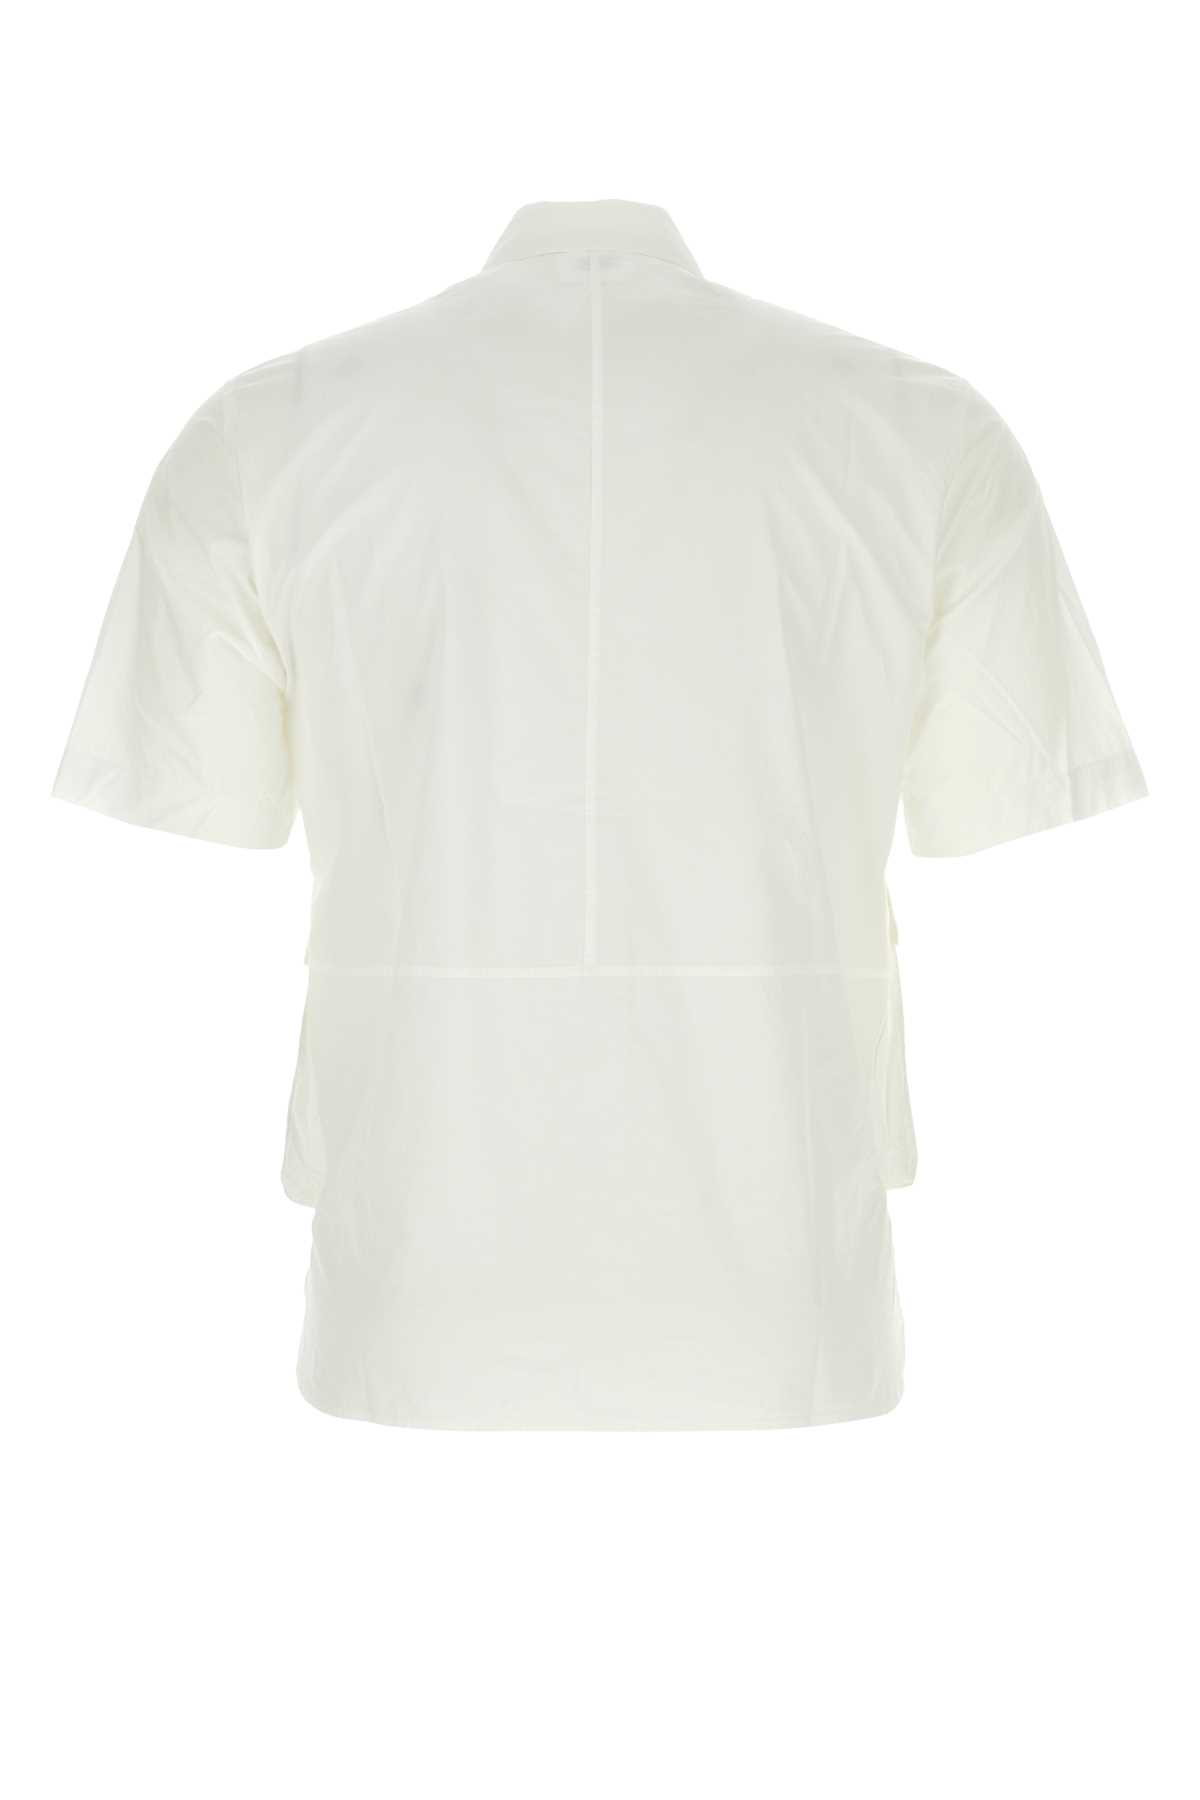 C.p. Company White Cotton Shirt In Gauzewhite